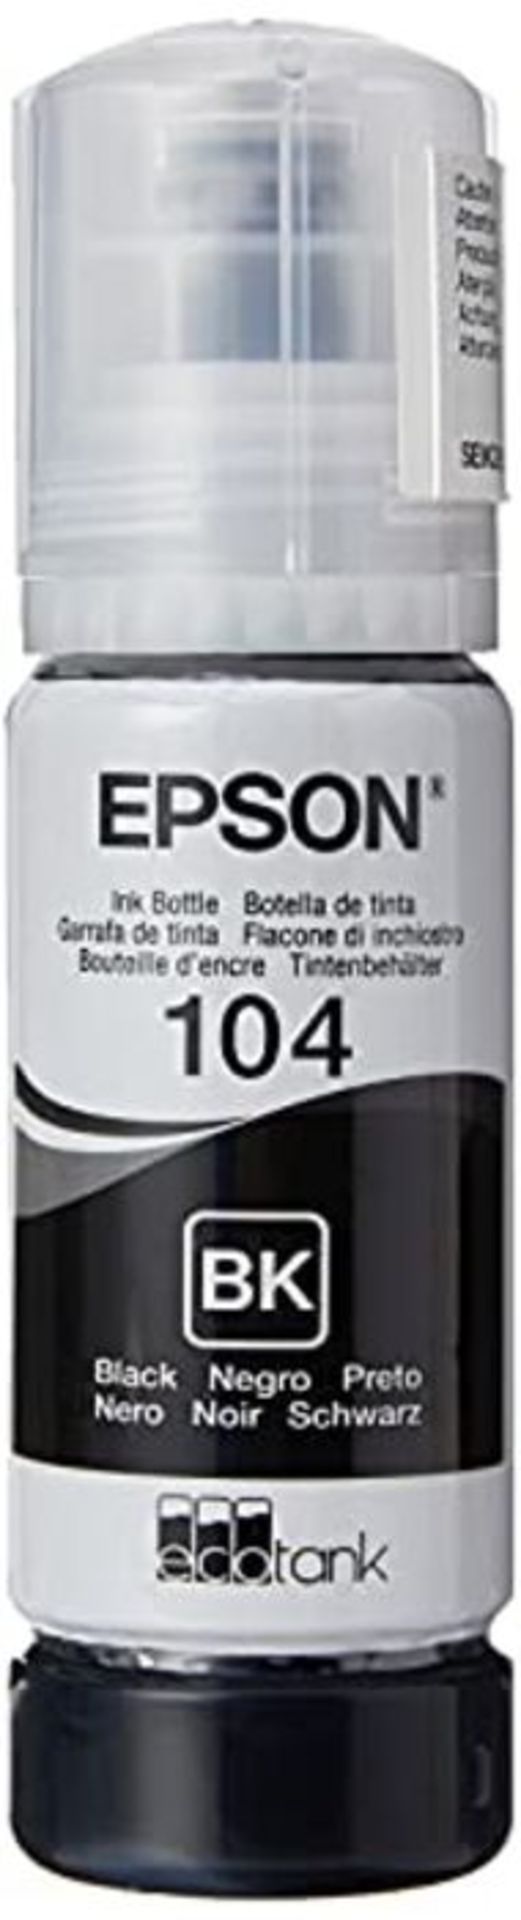 Epson EcoTank 104 Black Genuine Ink Bottle, Amazon Dash Replenishment Ready